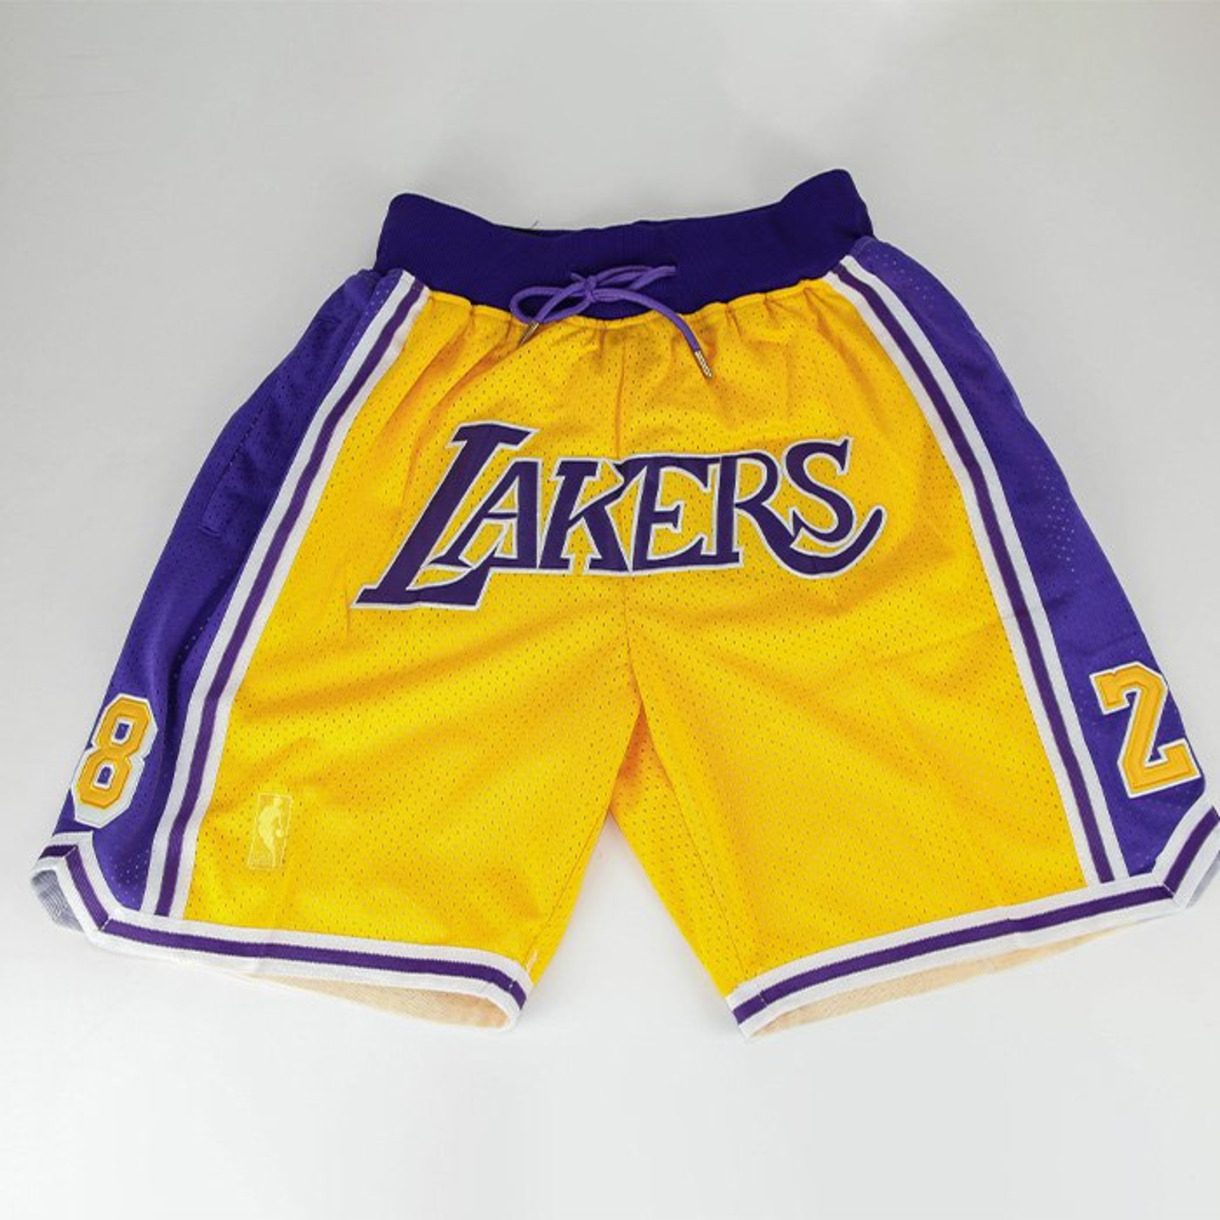 Justdon x NBA Lakers Team Shorts